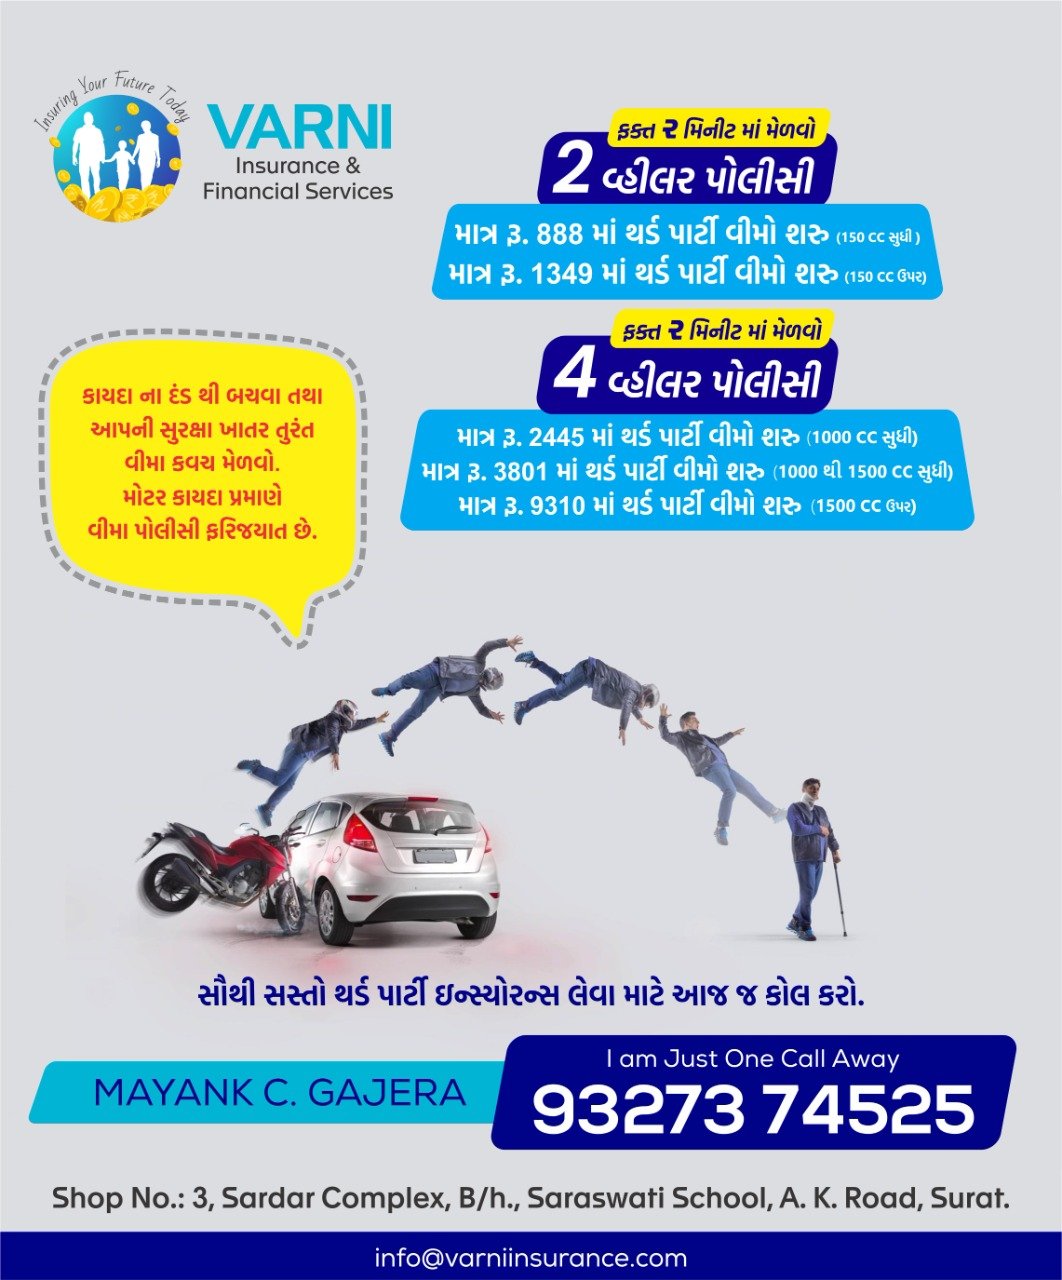 Varni Insurance & Financial Services